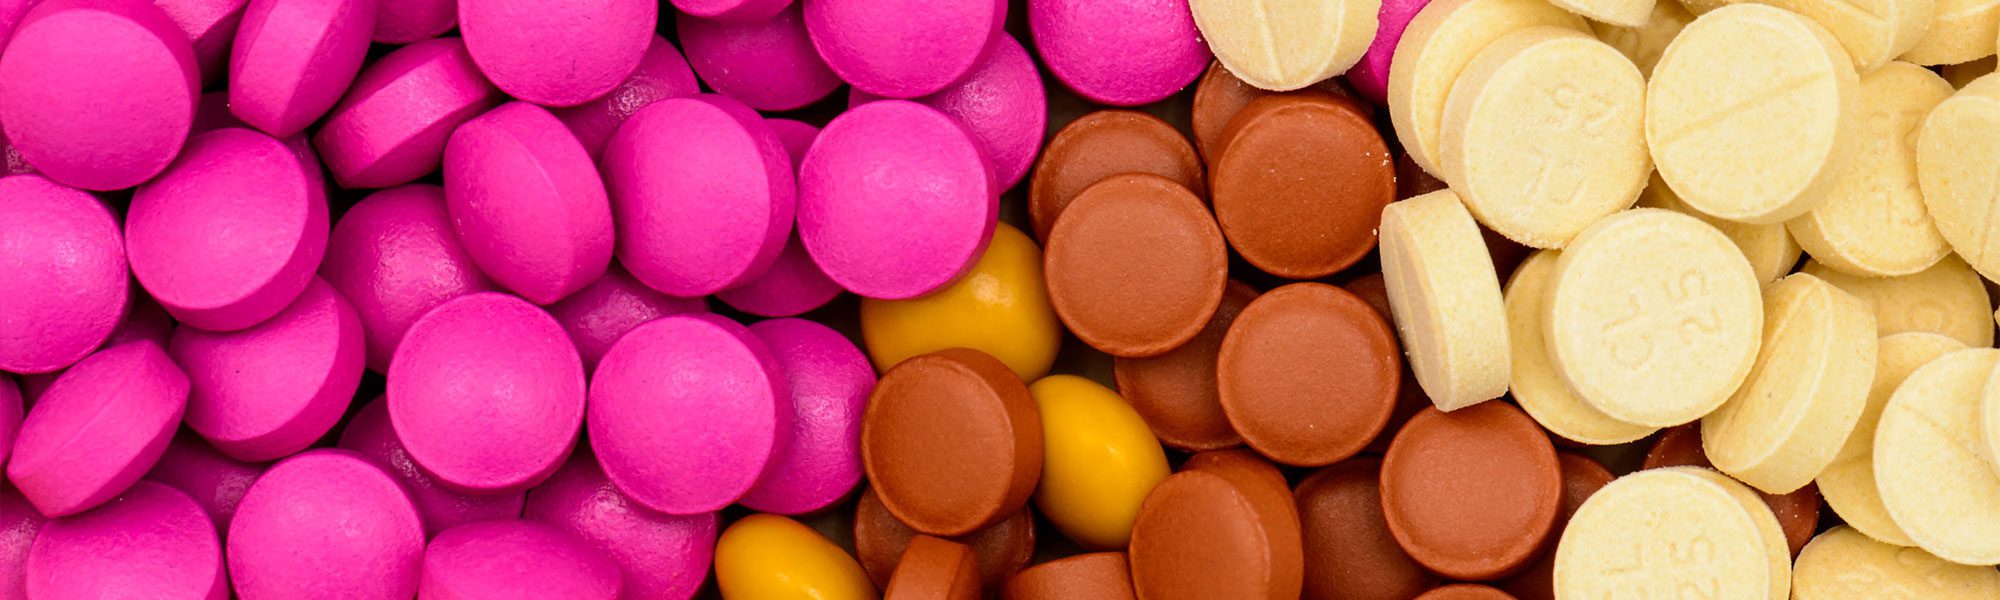 closeup of colorful medicine tablets